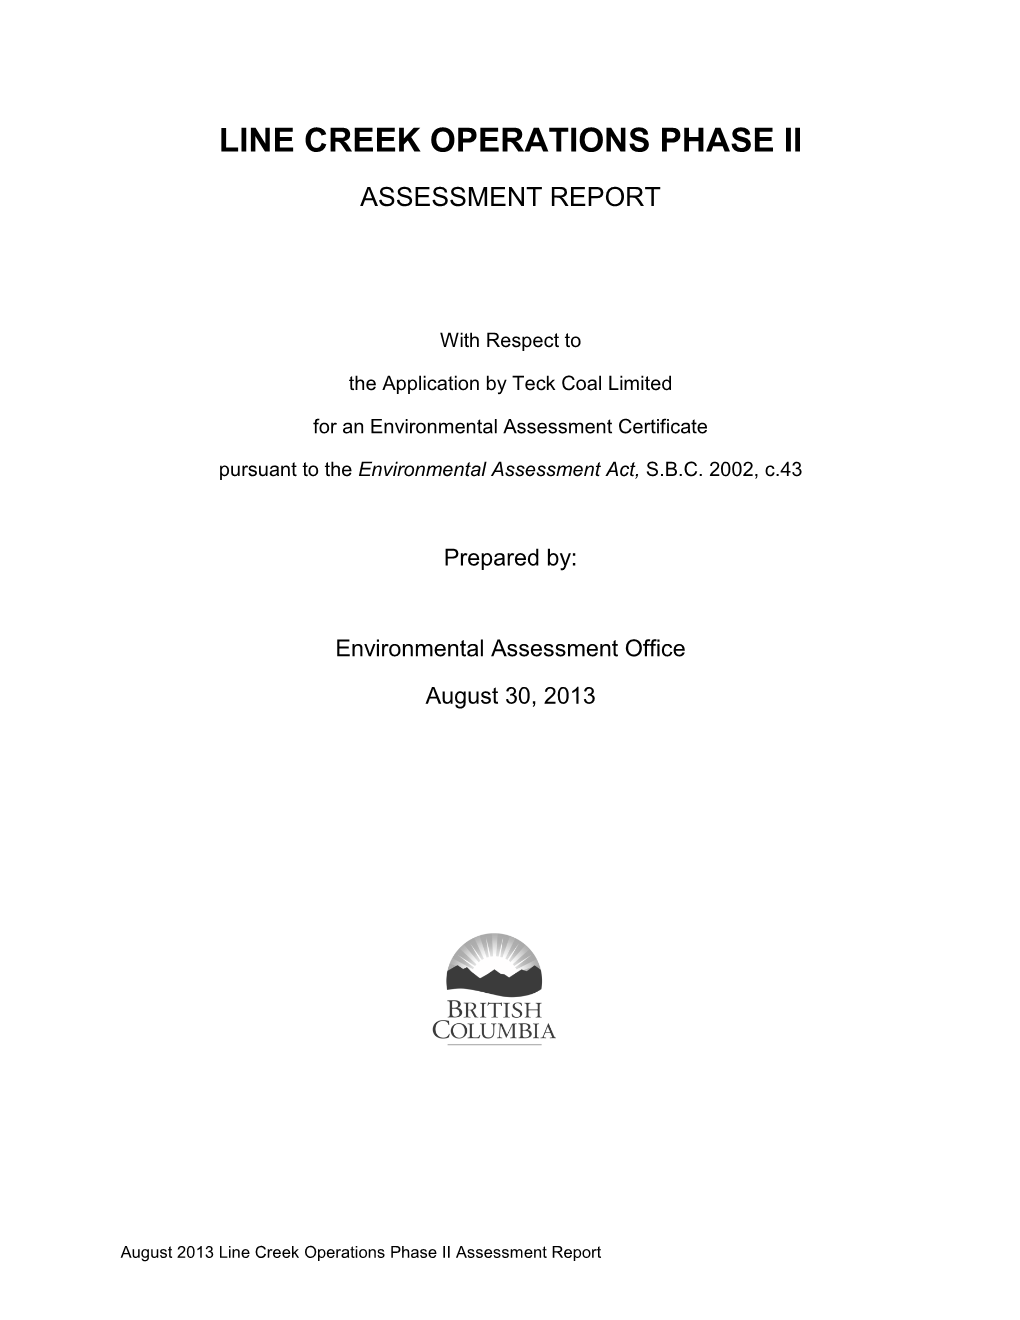 BC EAO AUG 30 2013 Line Creek Report.Pdf